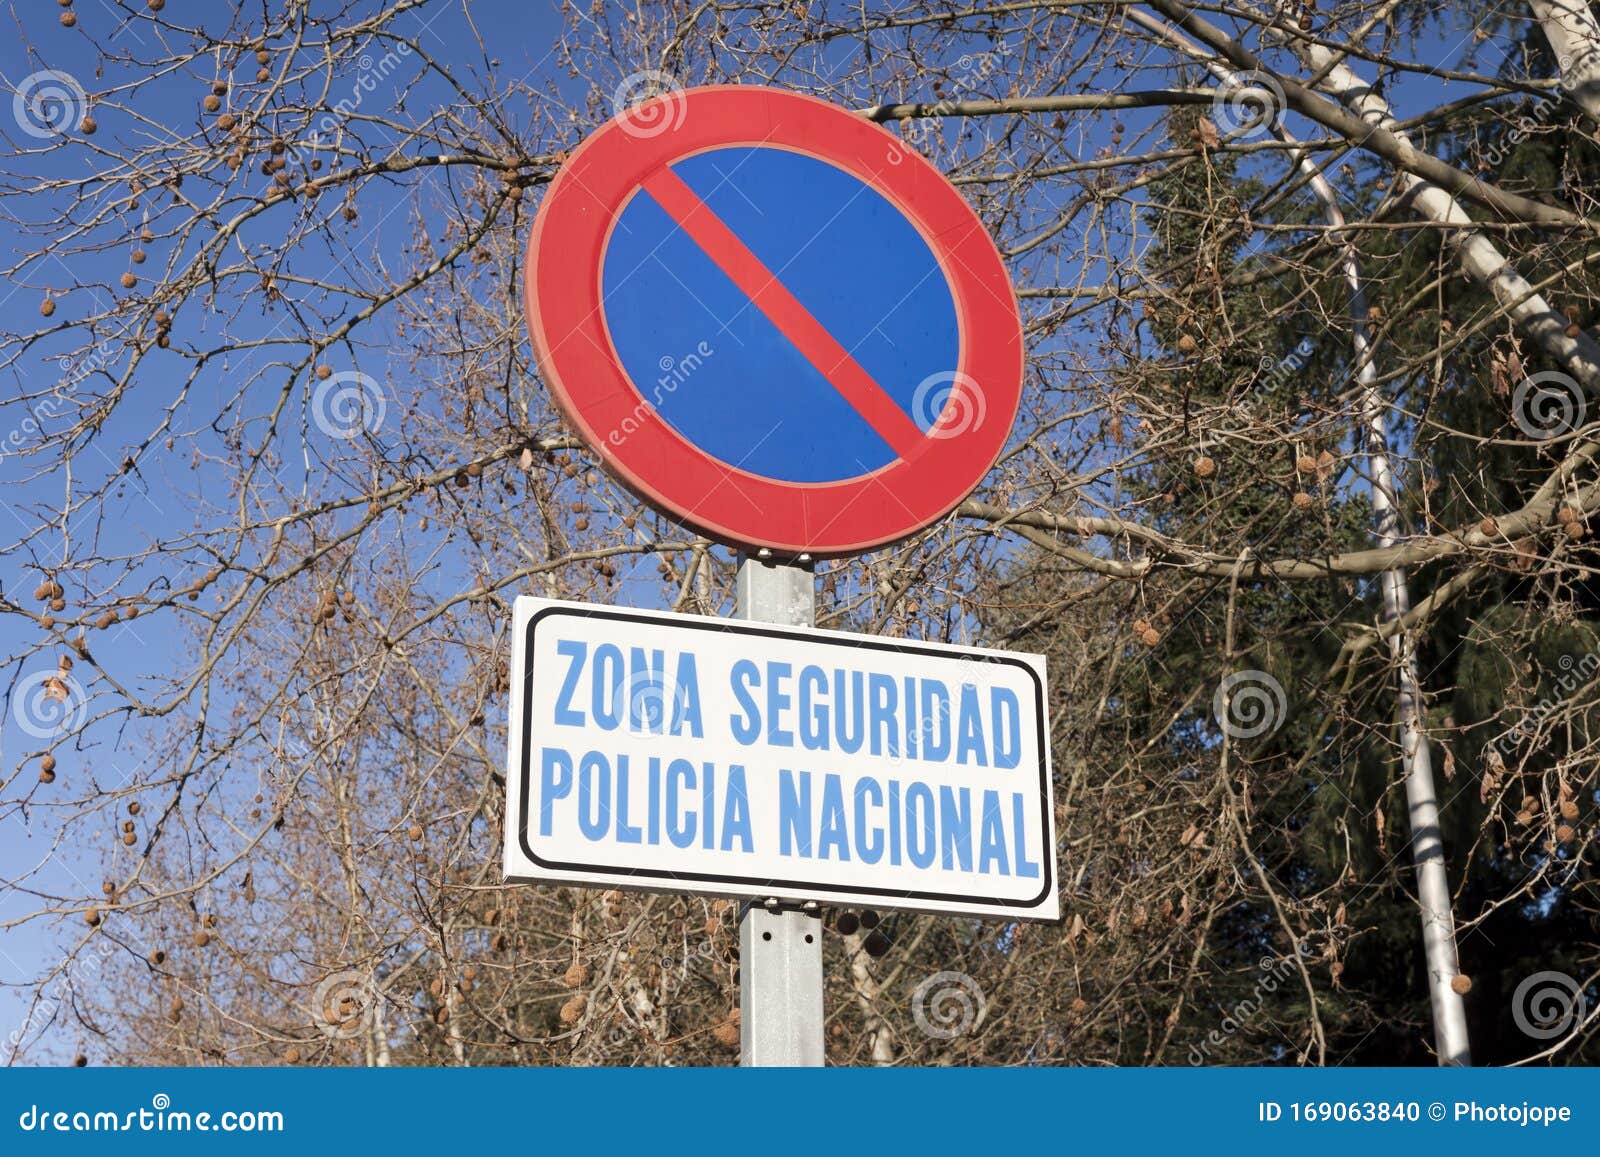 zona seguridad, policia nacional no parking sign. security zone, national police in spanish